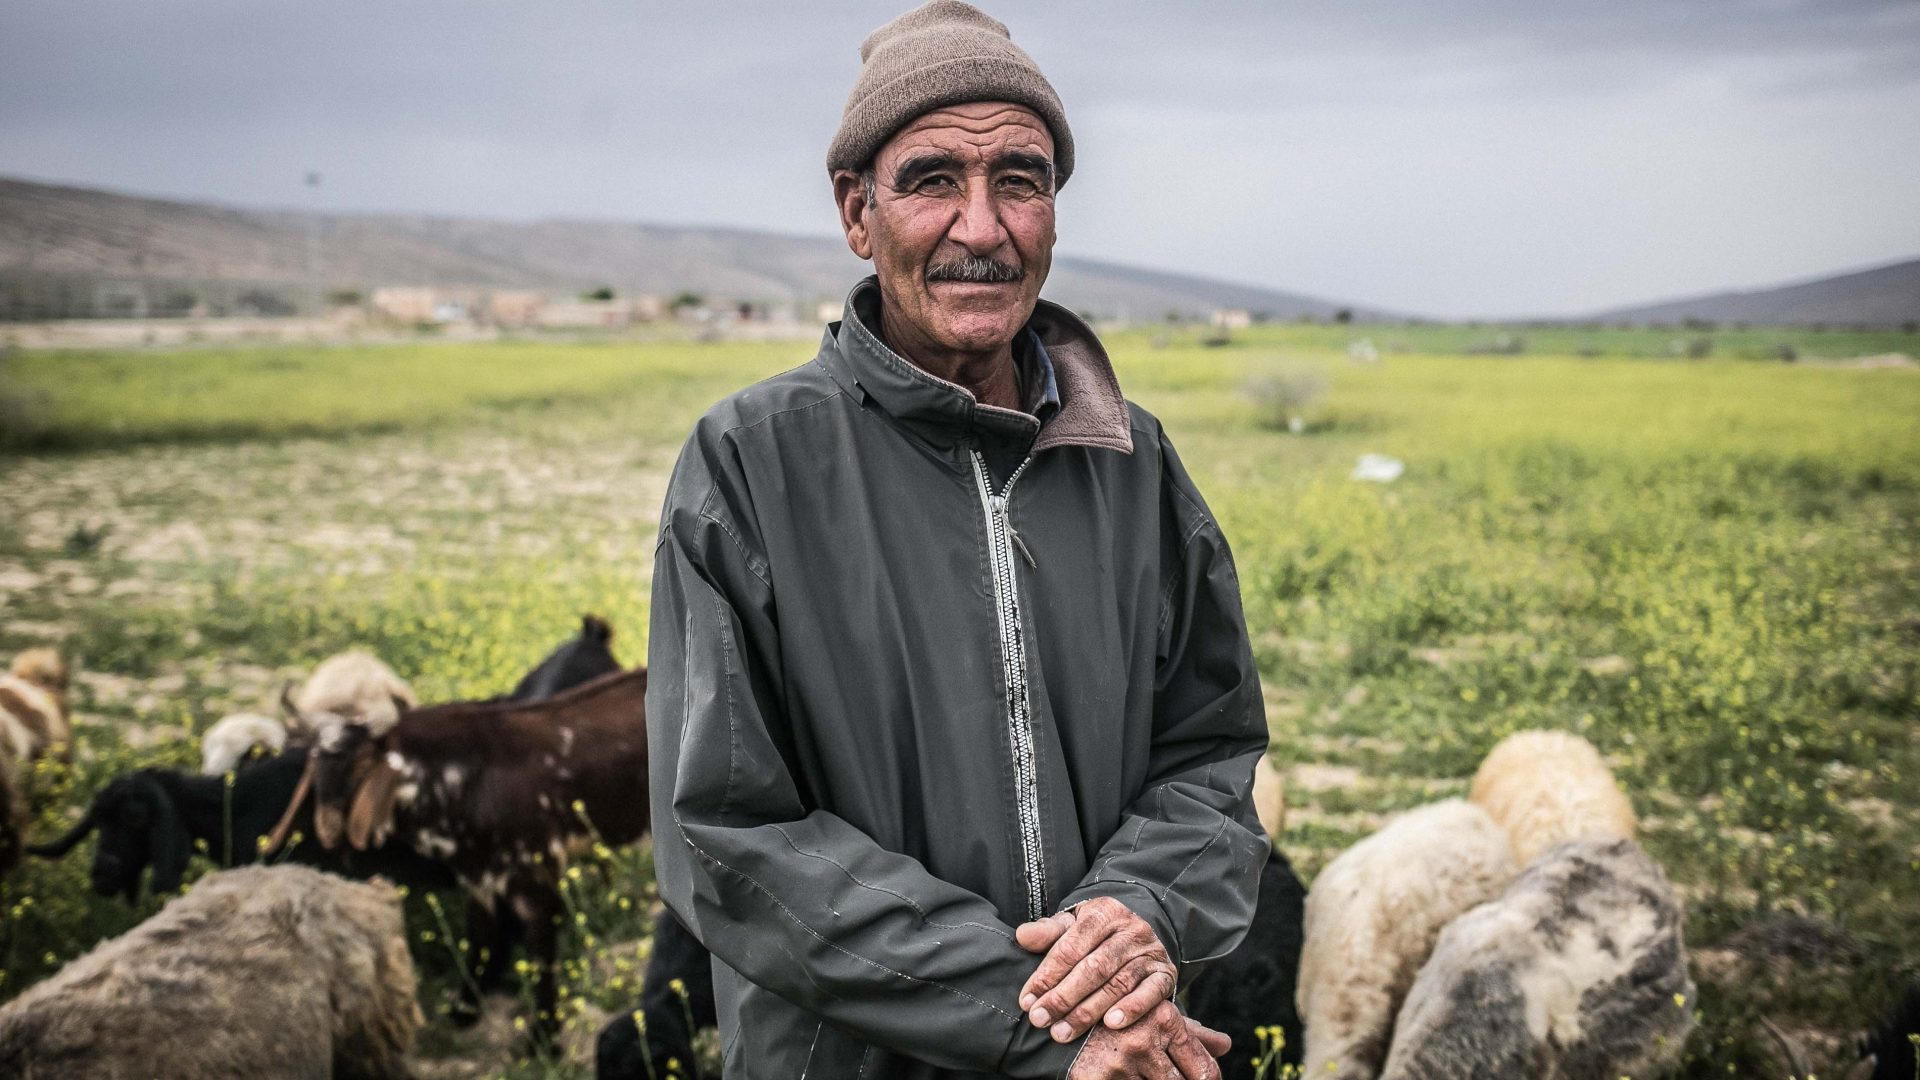 A shepherd from the village of Bozpar, Dashtestan county, Busher province.